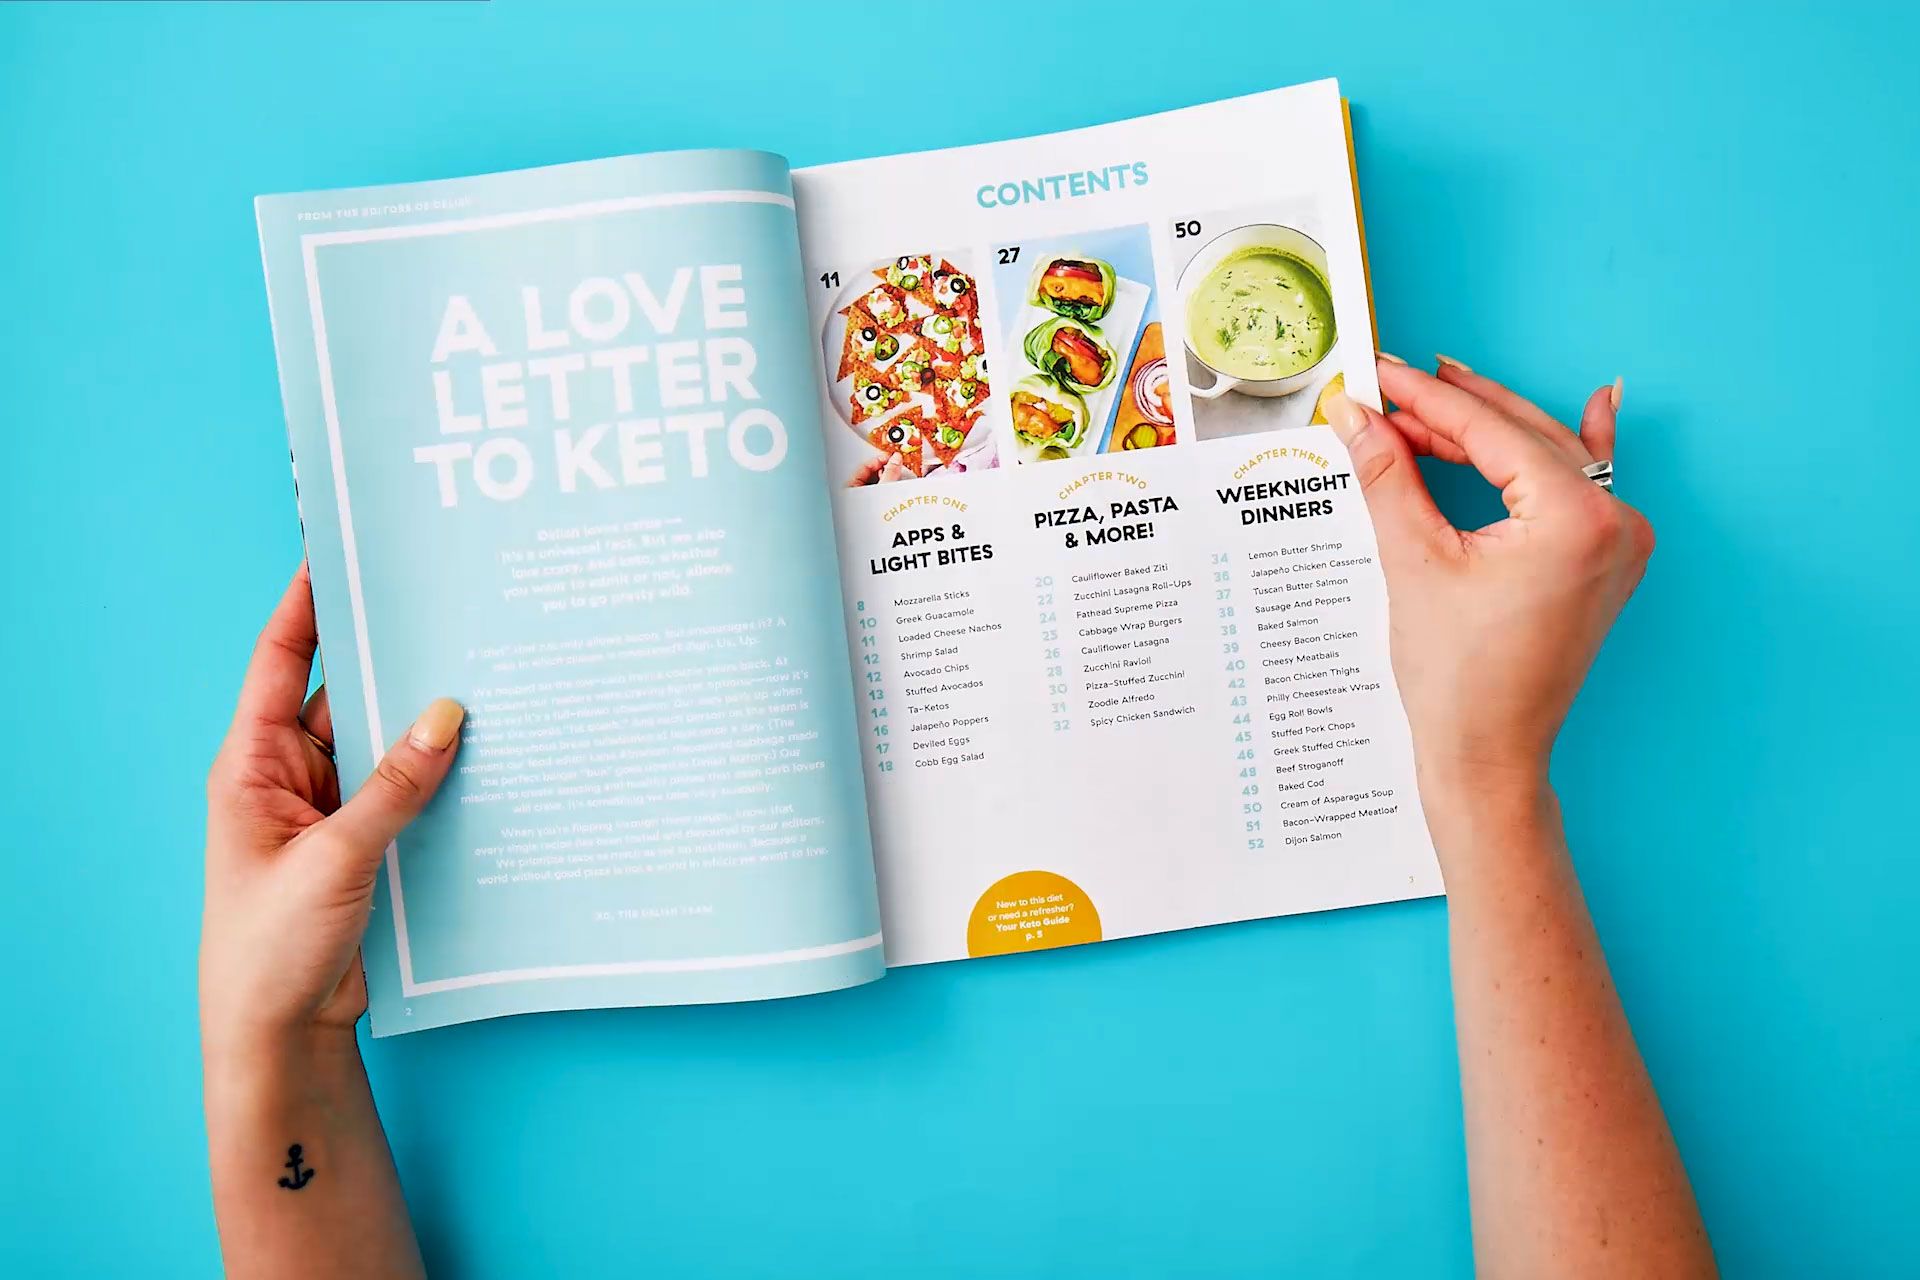 Keto meals #keto #ketobujo #bujo #bulletjournaling #recipes  Recipe book  diy, Recipe book design, Scrapbook recipe book